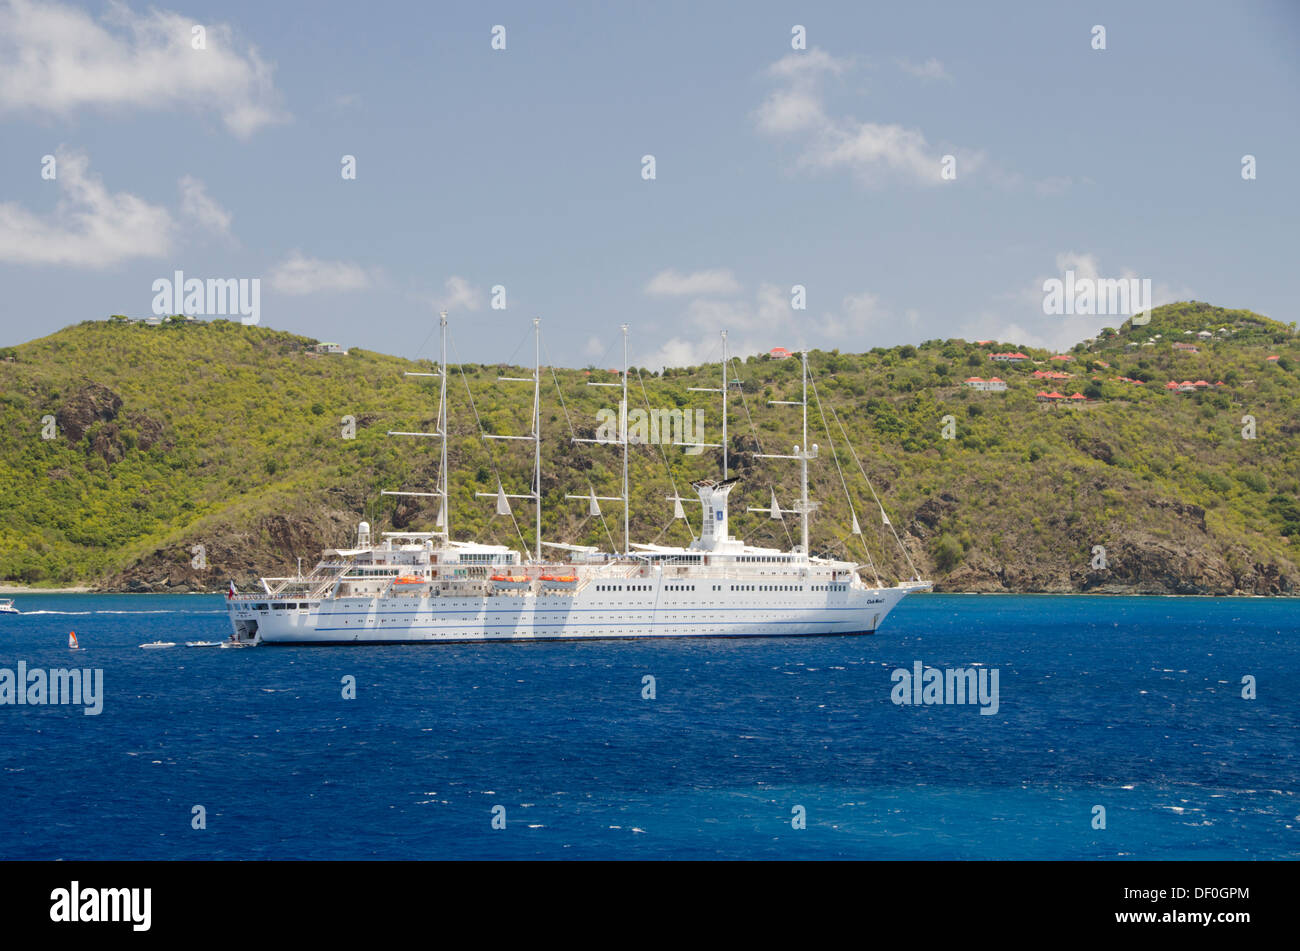 Le Indie occidentali francesi, isola caraibica di Saint Barthelemy (St. Bart's), la città capitale di Gustavia. Club Med ship, Club Med 2 Foto Stock